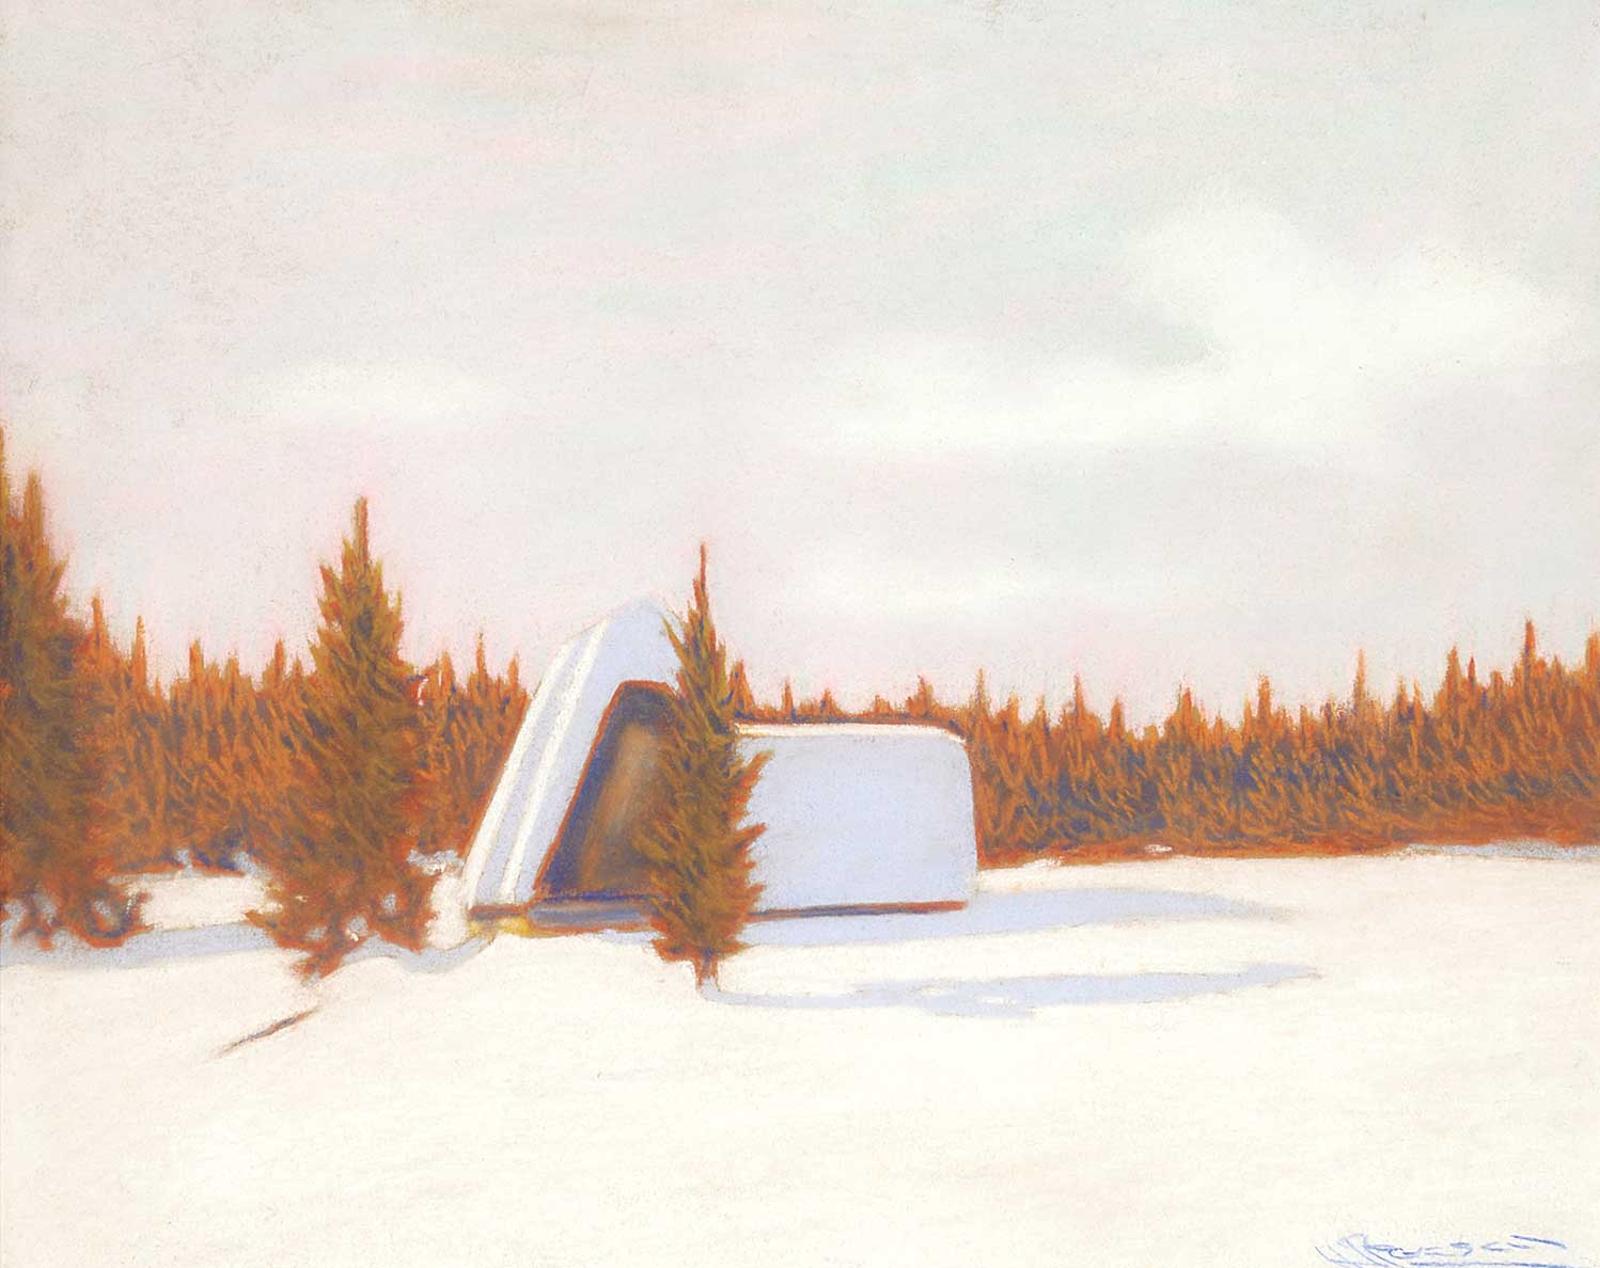 Halfred A. Tygesen (1890-1951) - Untitled - Winter Shadows